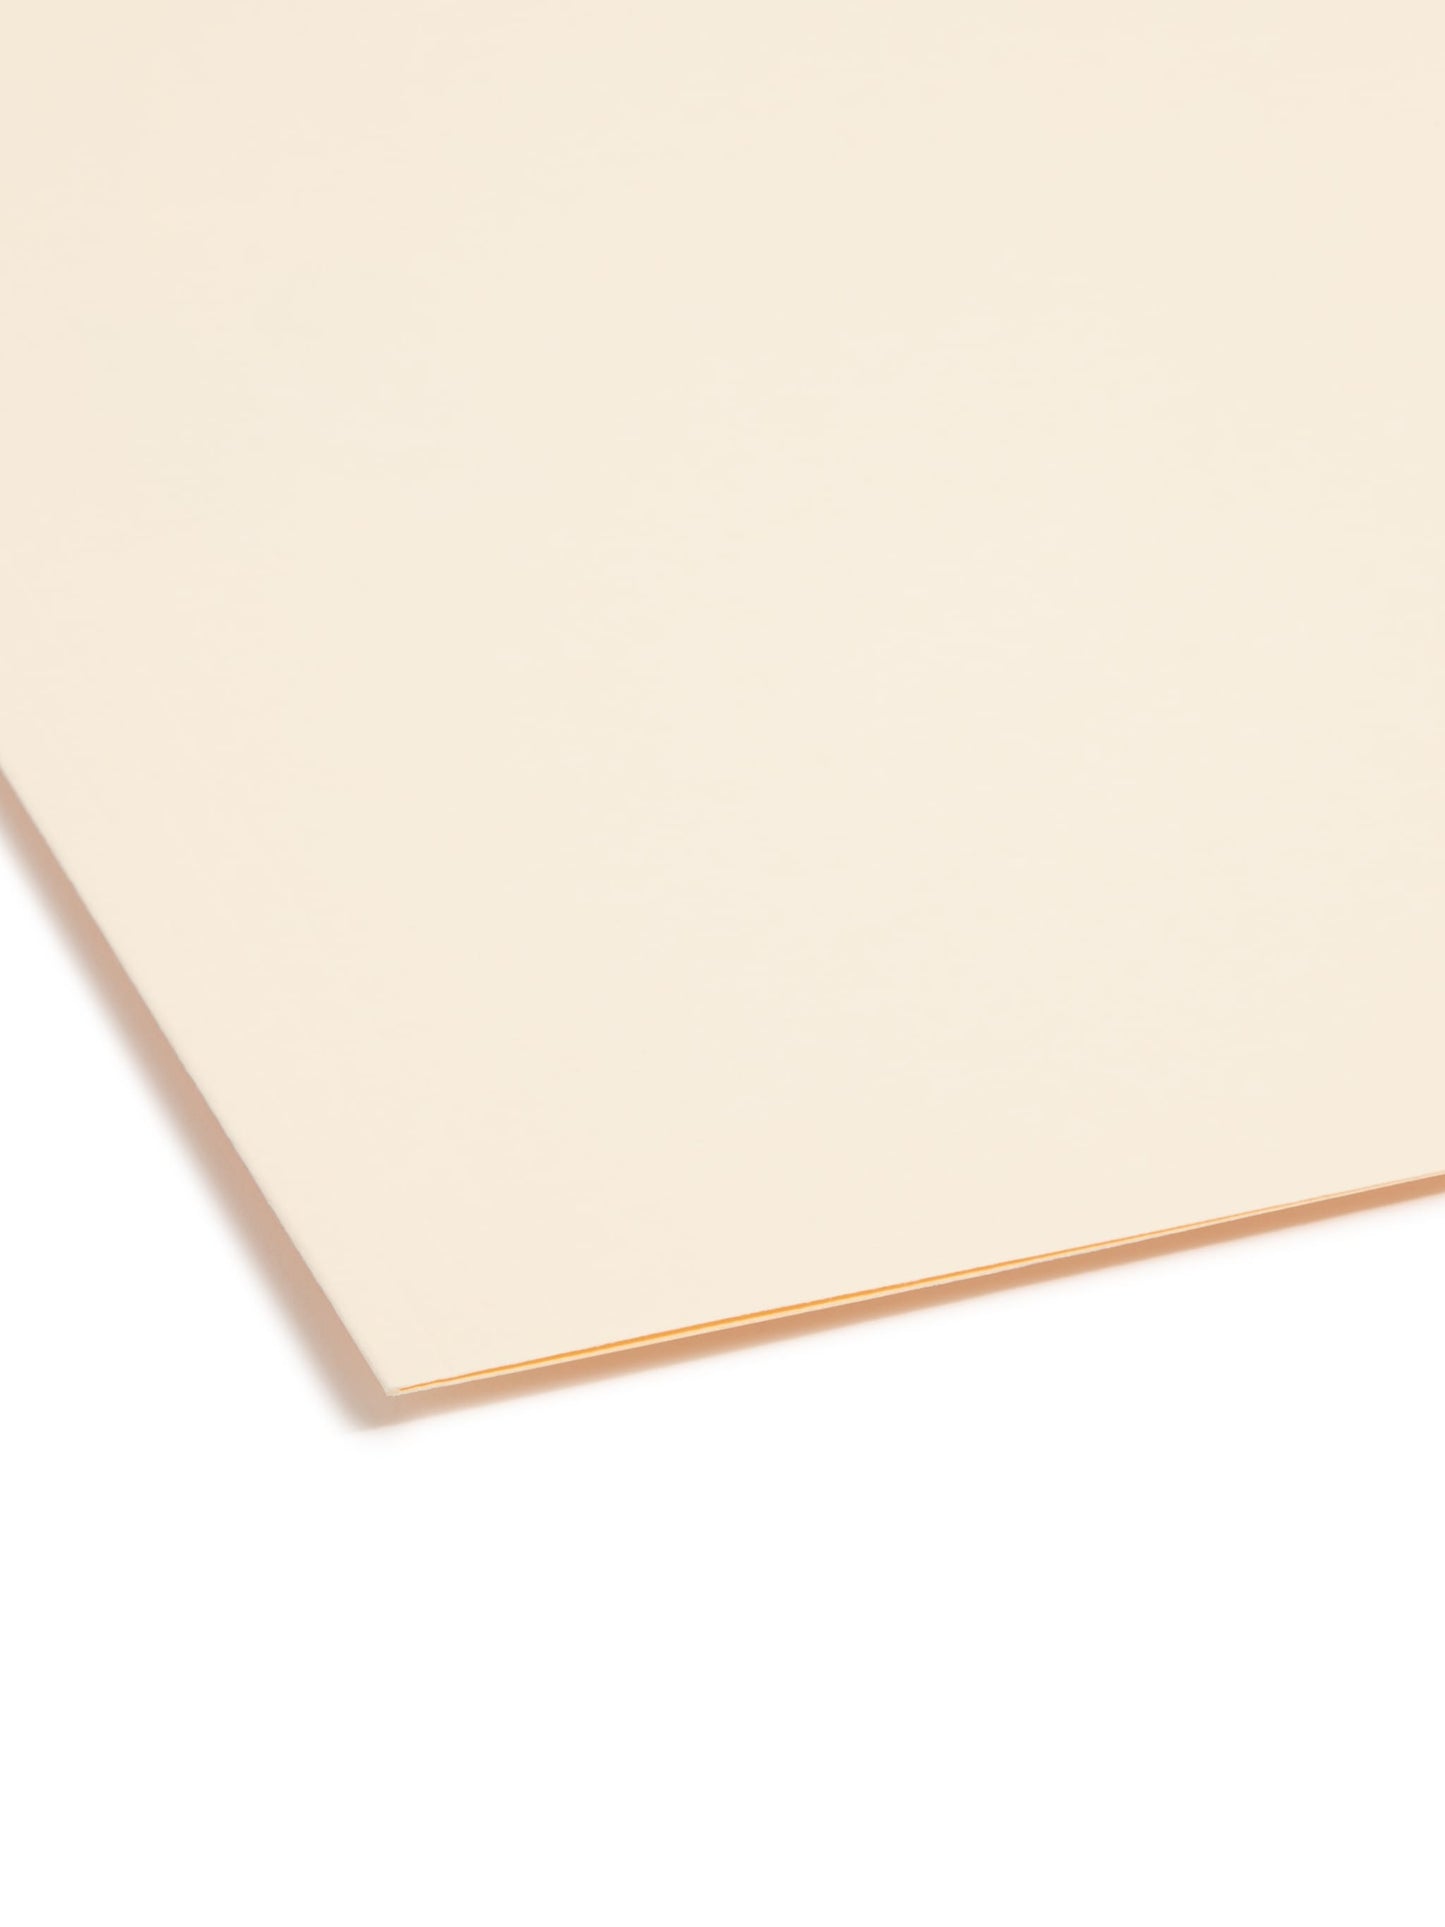 Reinforced Tab Fastener File Folders, 1/3-Cut Right Tab, Manila Color, Legal Size, Set of 50, 086486195386